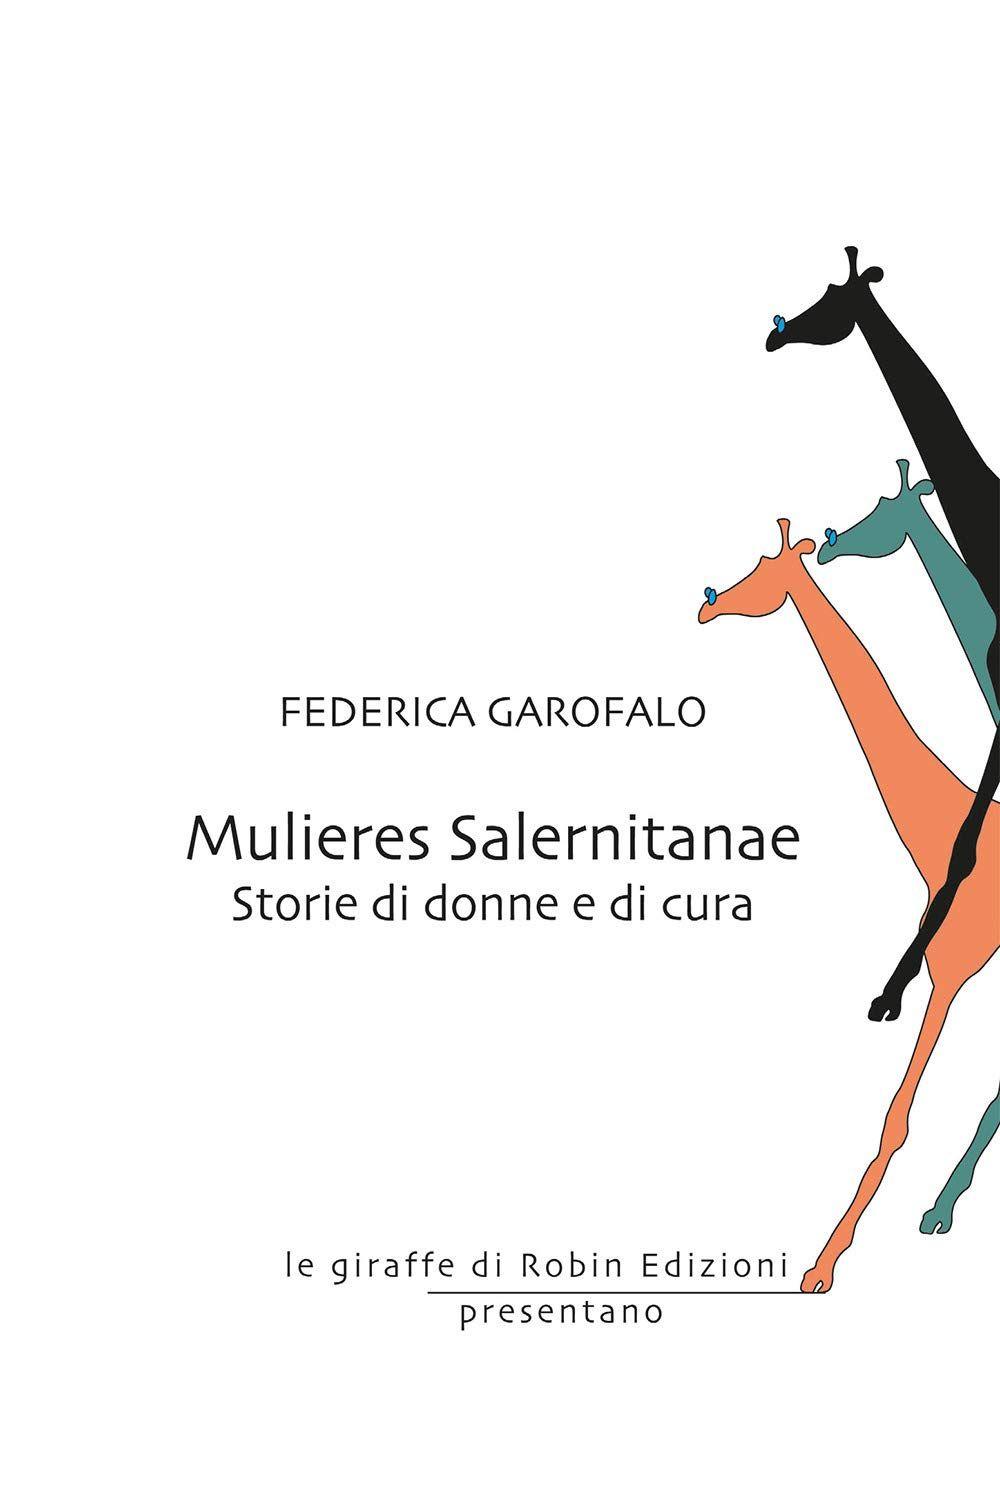 Libro "Mulieres Salernitanae" di Federica  Garofalo